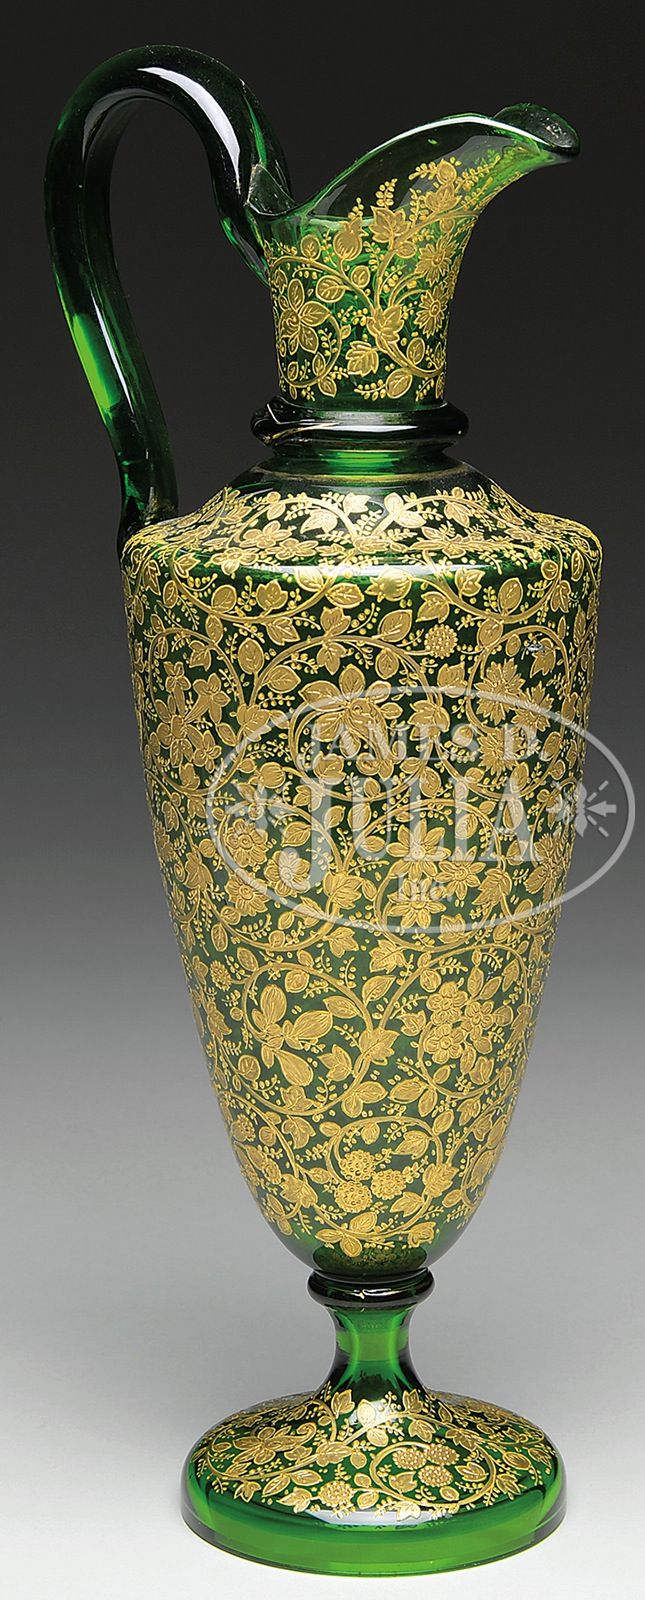 MOSER DECORATED EWER. Moser green glass ewer has dense gold enamel floral decora...